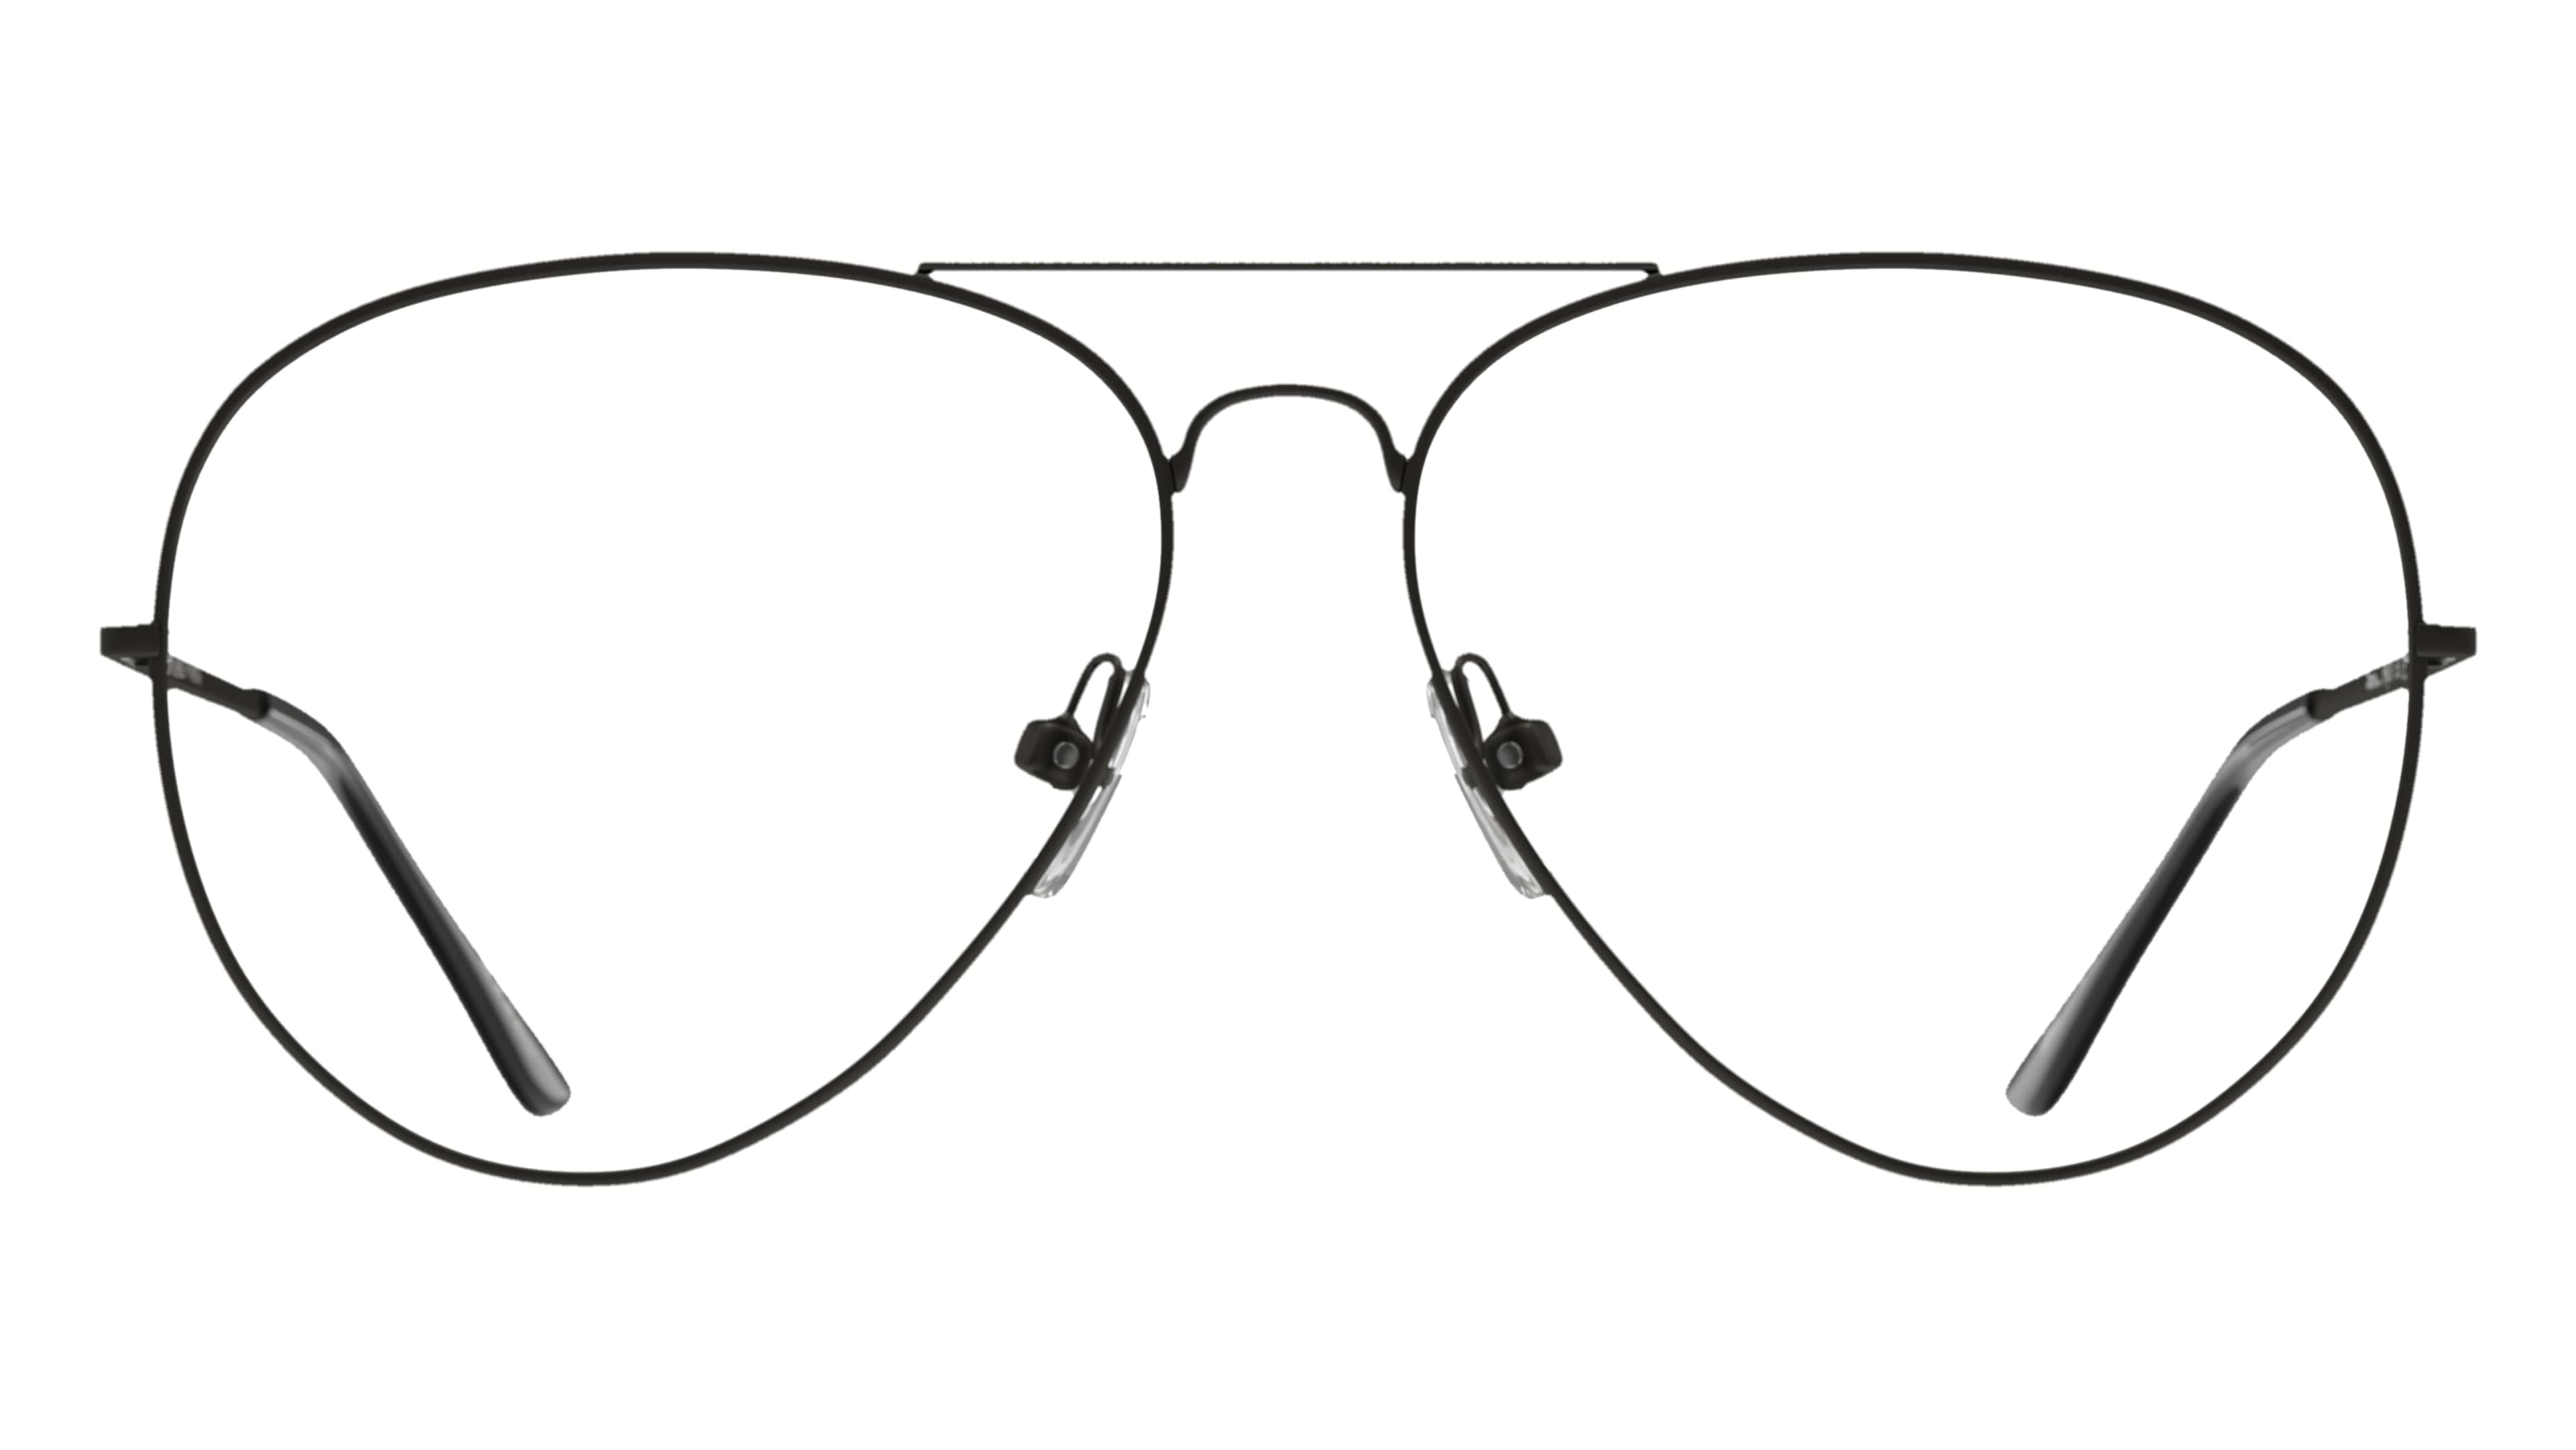 Линзмастер очки для зрения. Медицинские очки. See mo оправы. Очки медицинские однофокальные сферические.